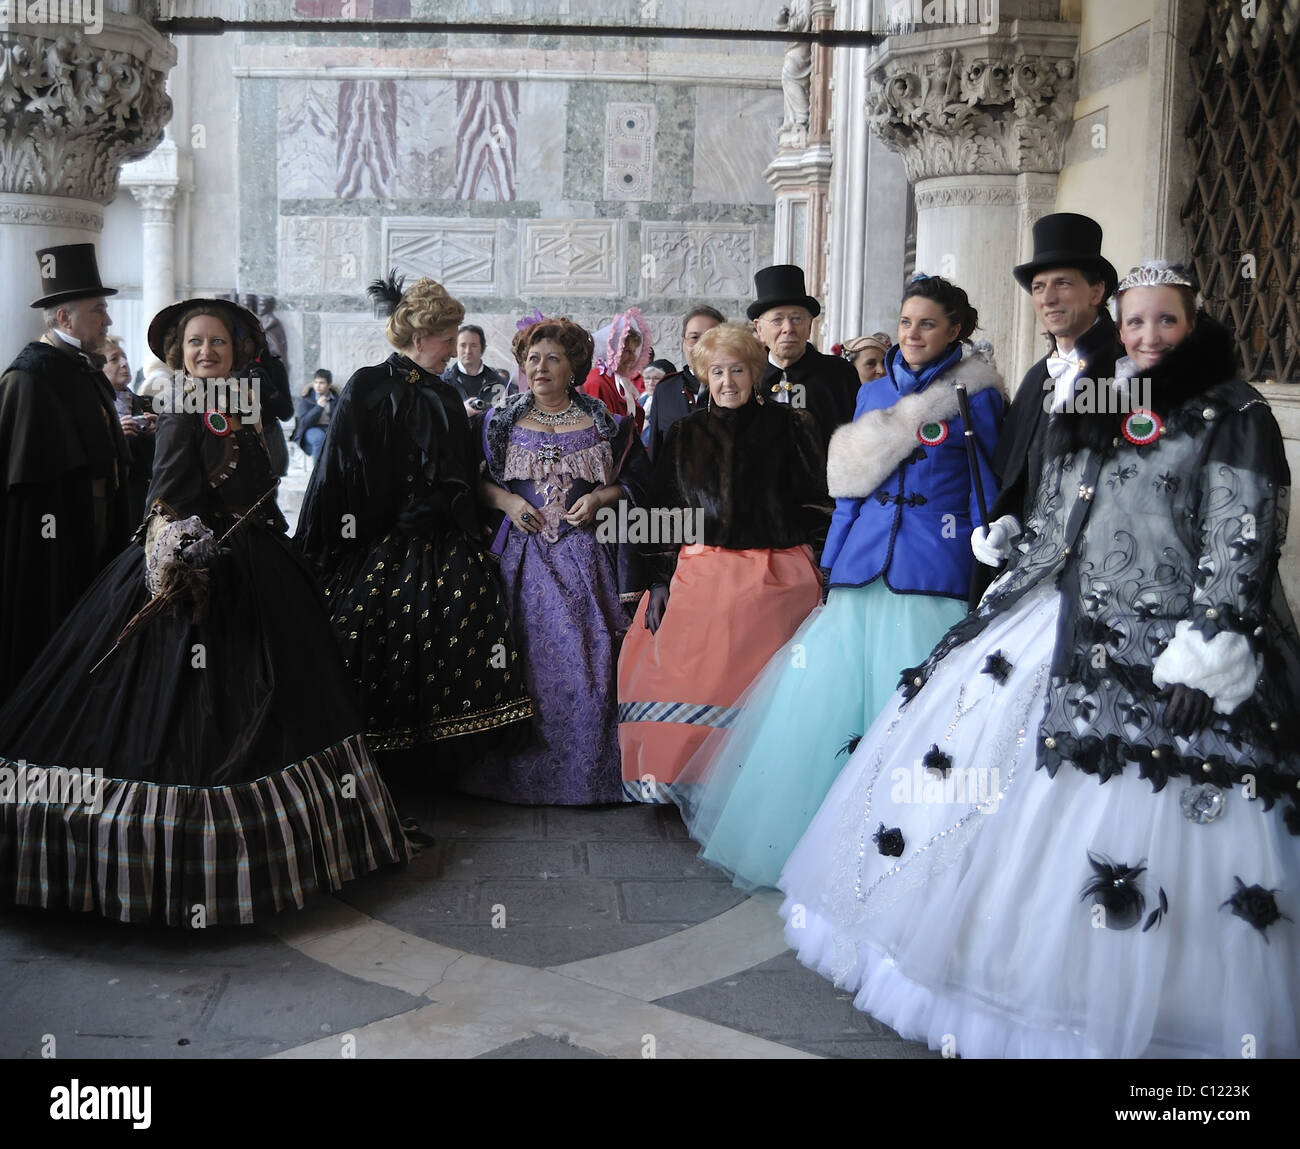 Members of the association 'Amici del Carnevale di Venezia' wearing 19th century costumes pose in St Mark Square Stock Photo